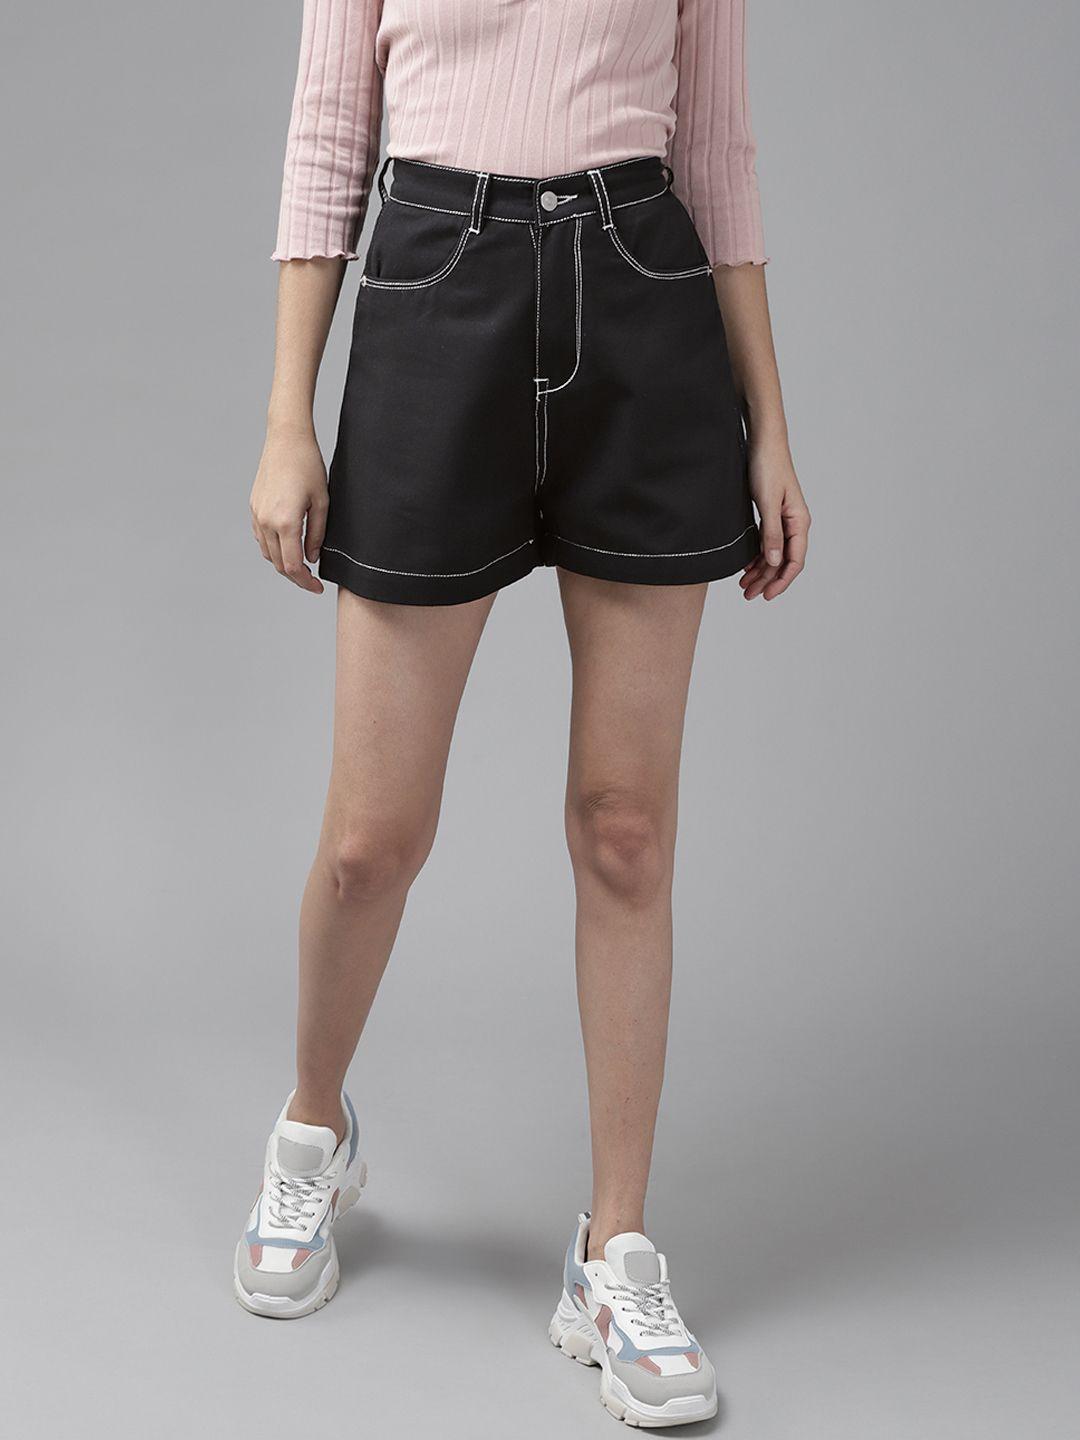 kassually-women-black-high-rise-outdoor-denim-shorts